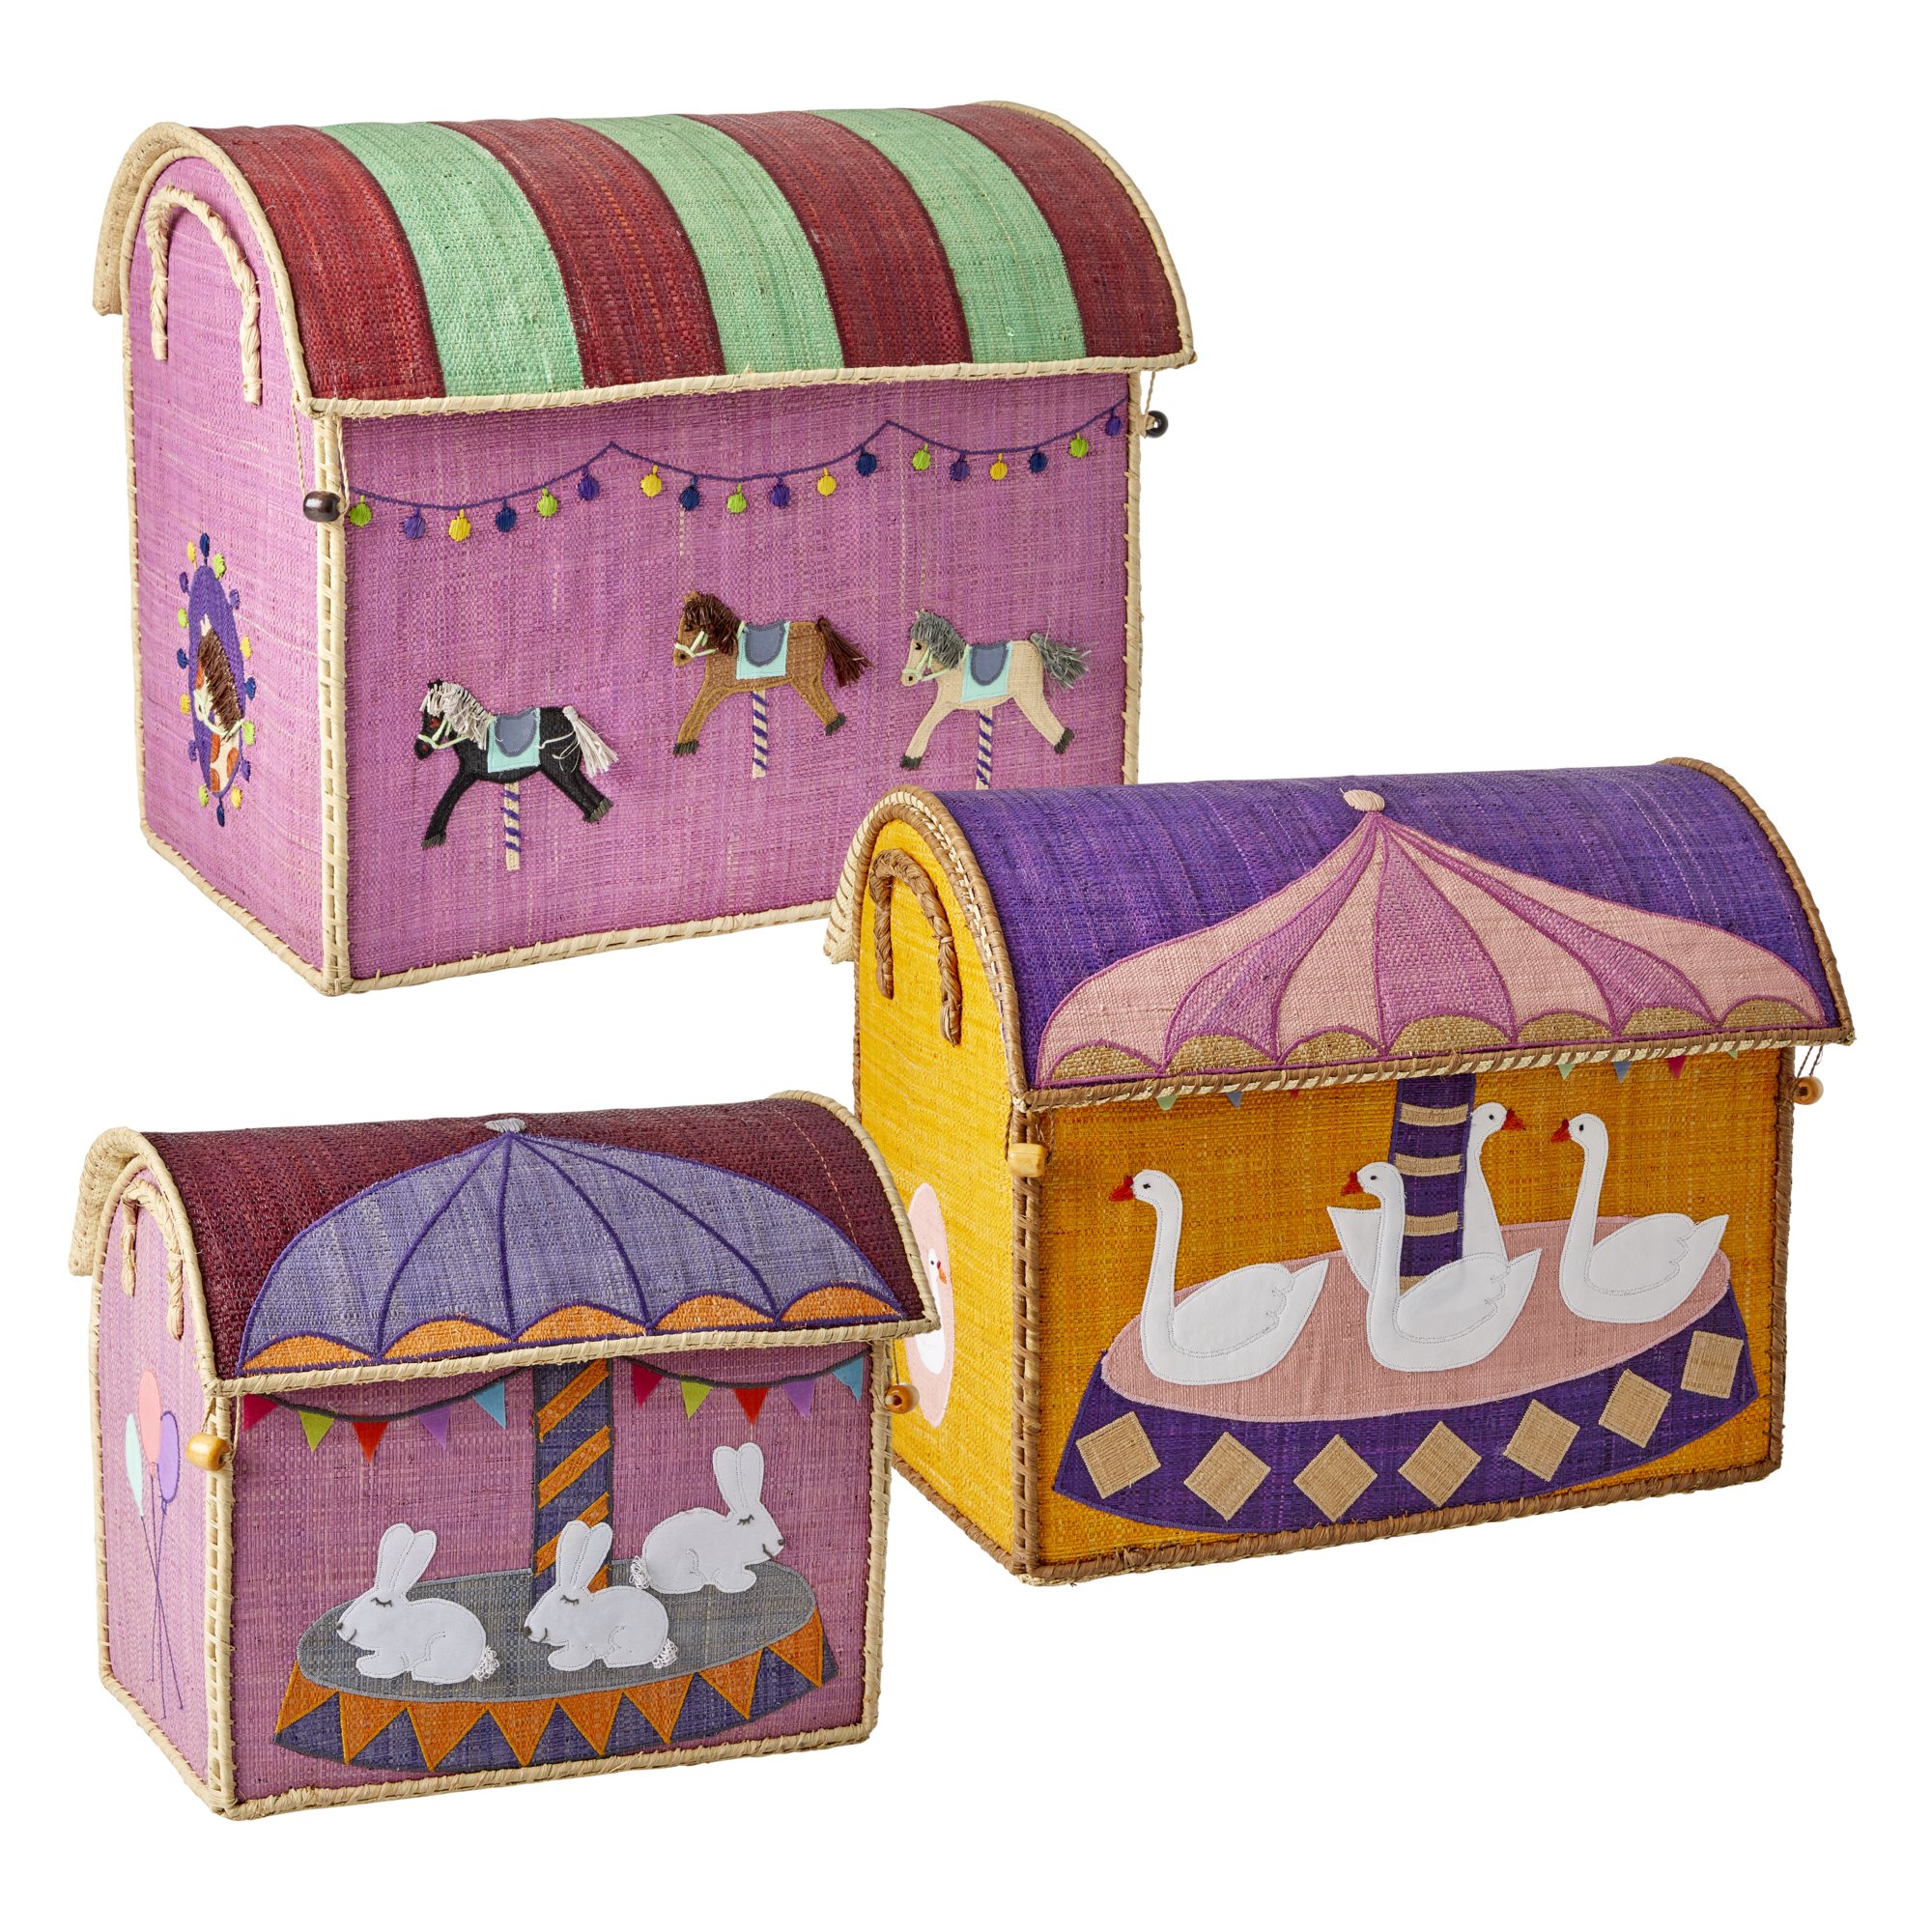 Rice - Large Set of 3 Toy Baskets - Carousel Theme